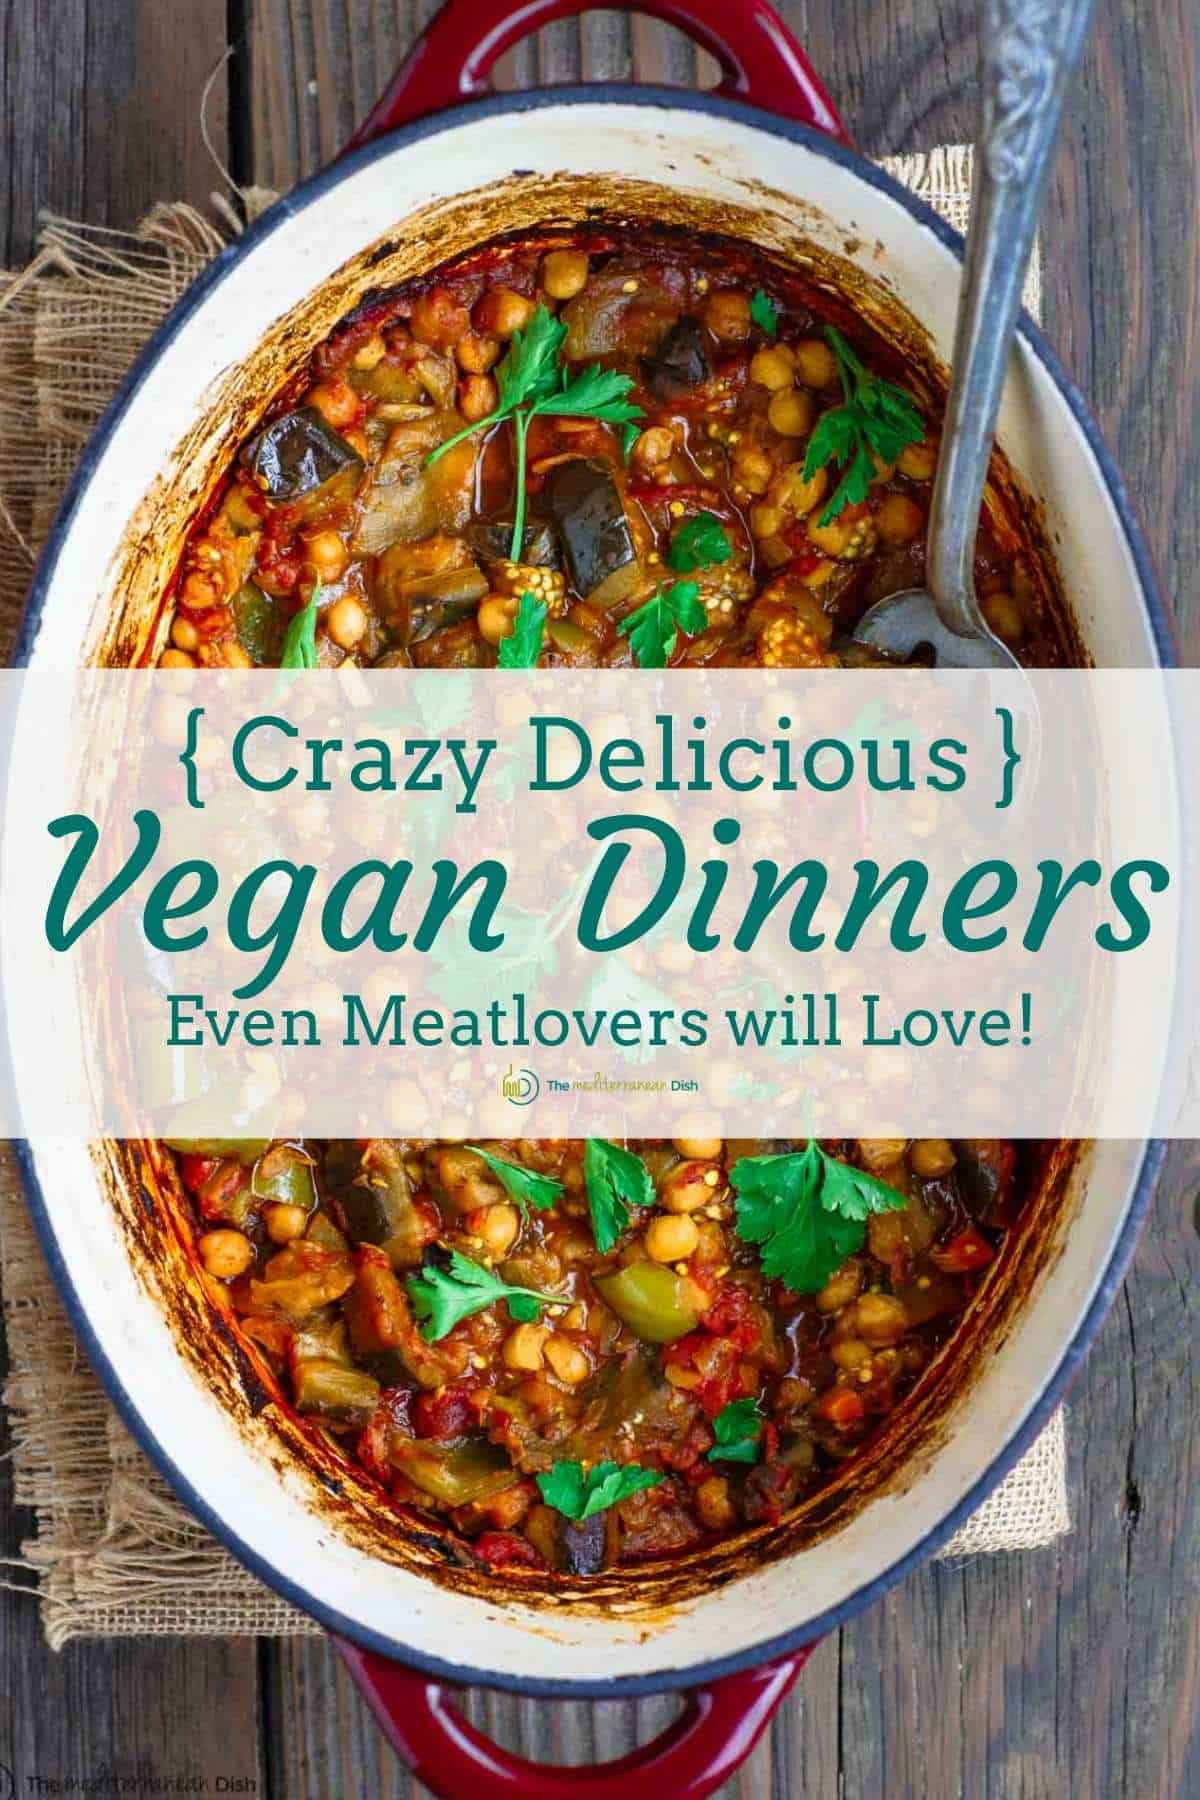 Well-Balanced Vegan Recipes (Whole Food, Plant Based) - The Simple Veganista